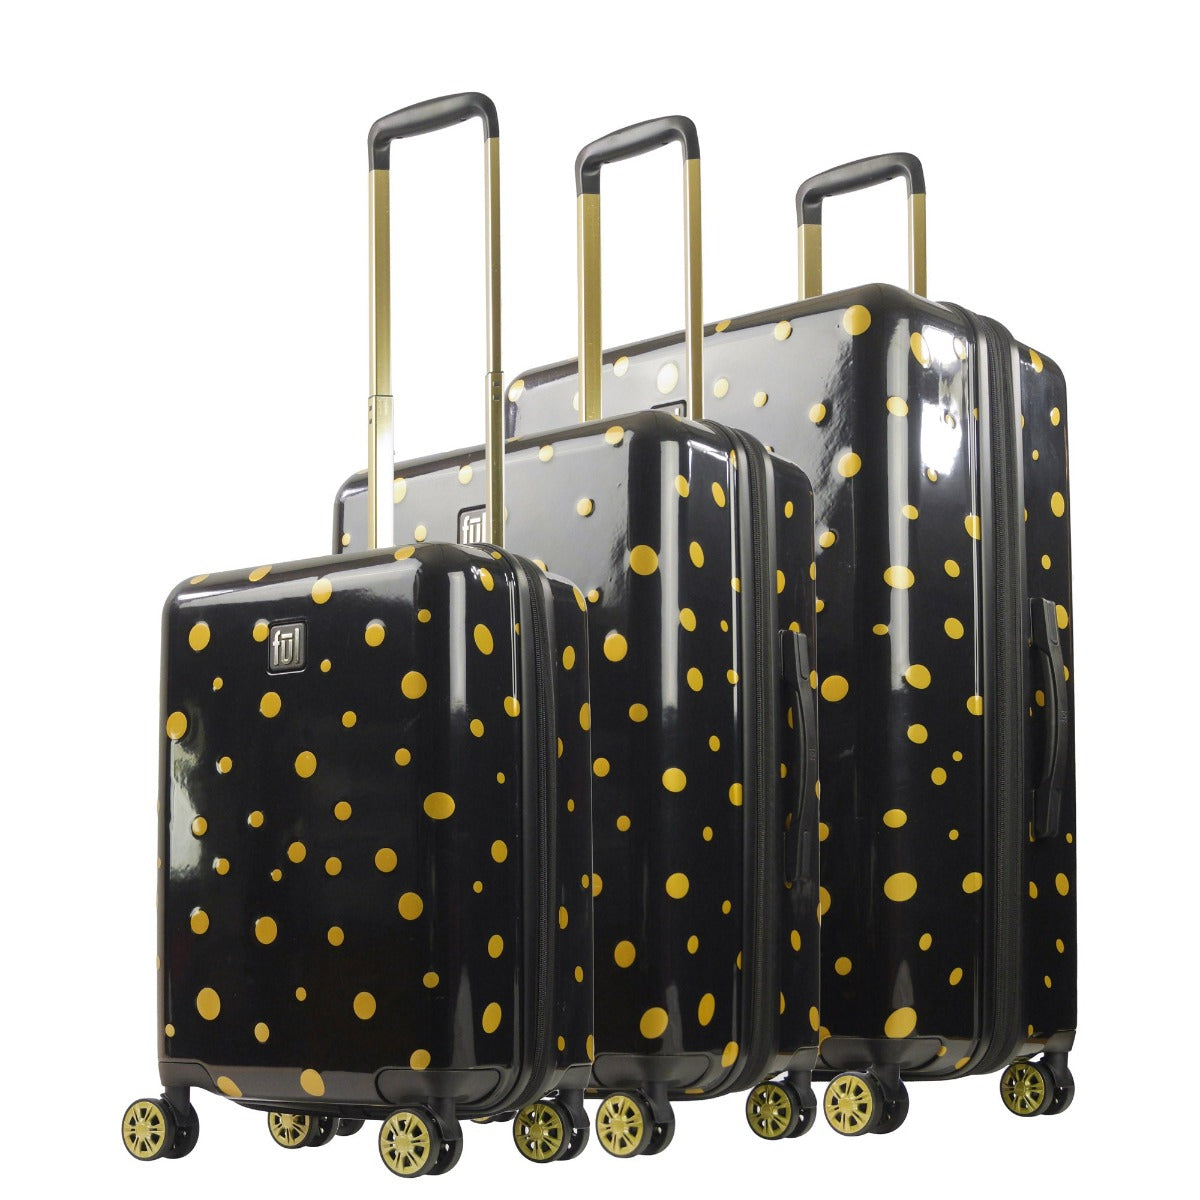 Ful Impulse Mixed Dots Hardside Spinner Luggage 3 piece set Black Gold Suitcase